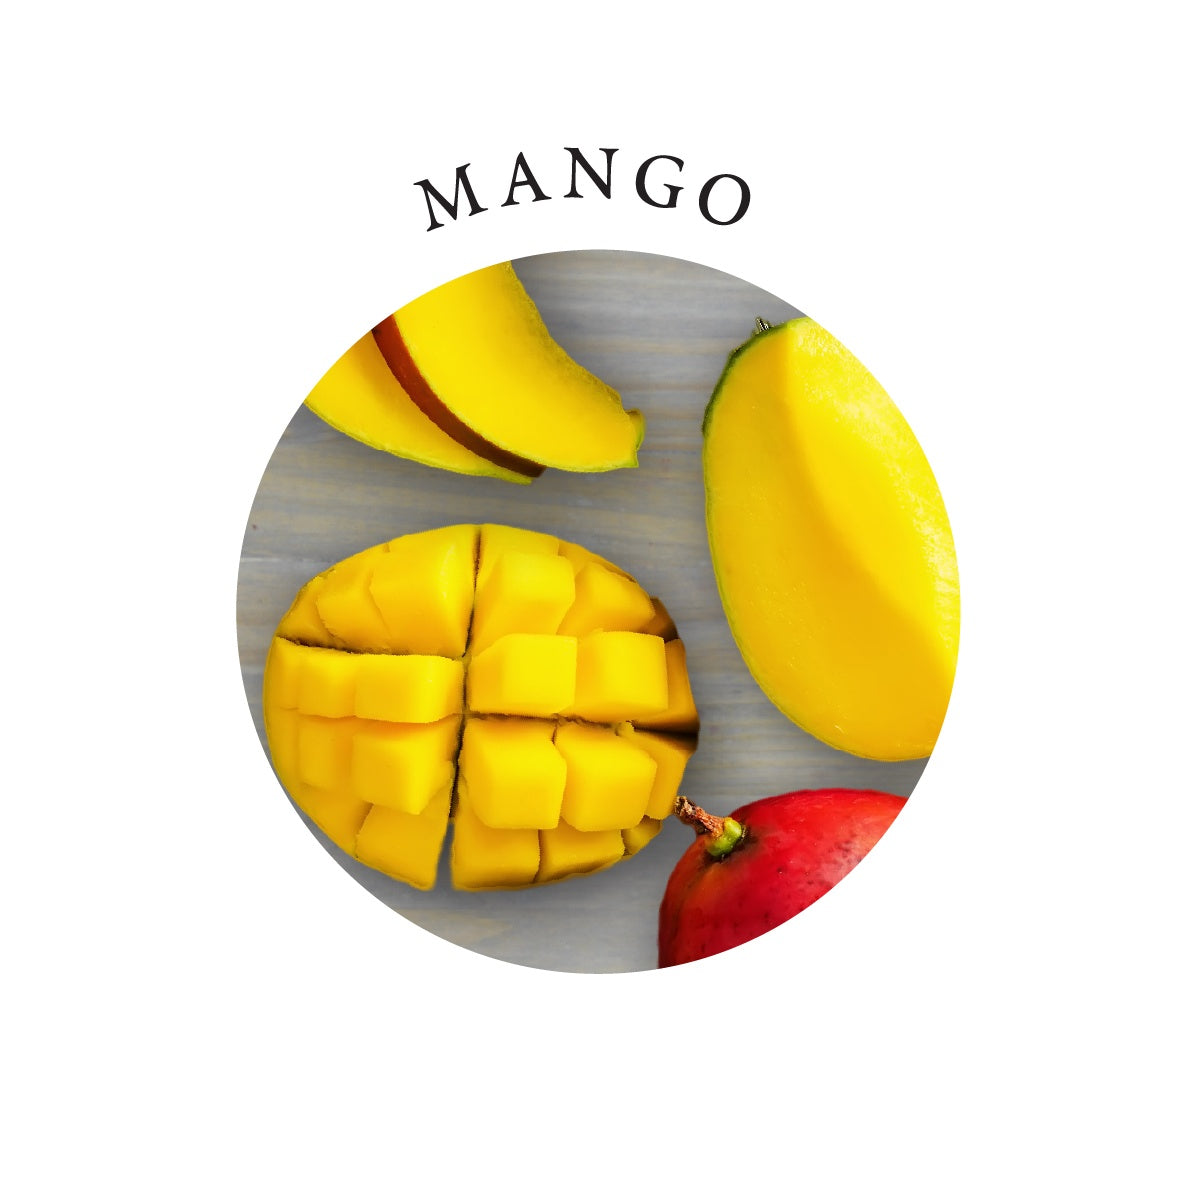 Earthly Body Edible Massage Oil - Mango, 8oz/236ml